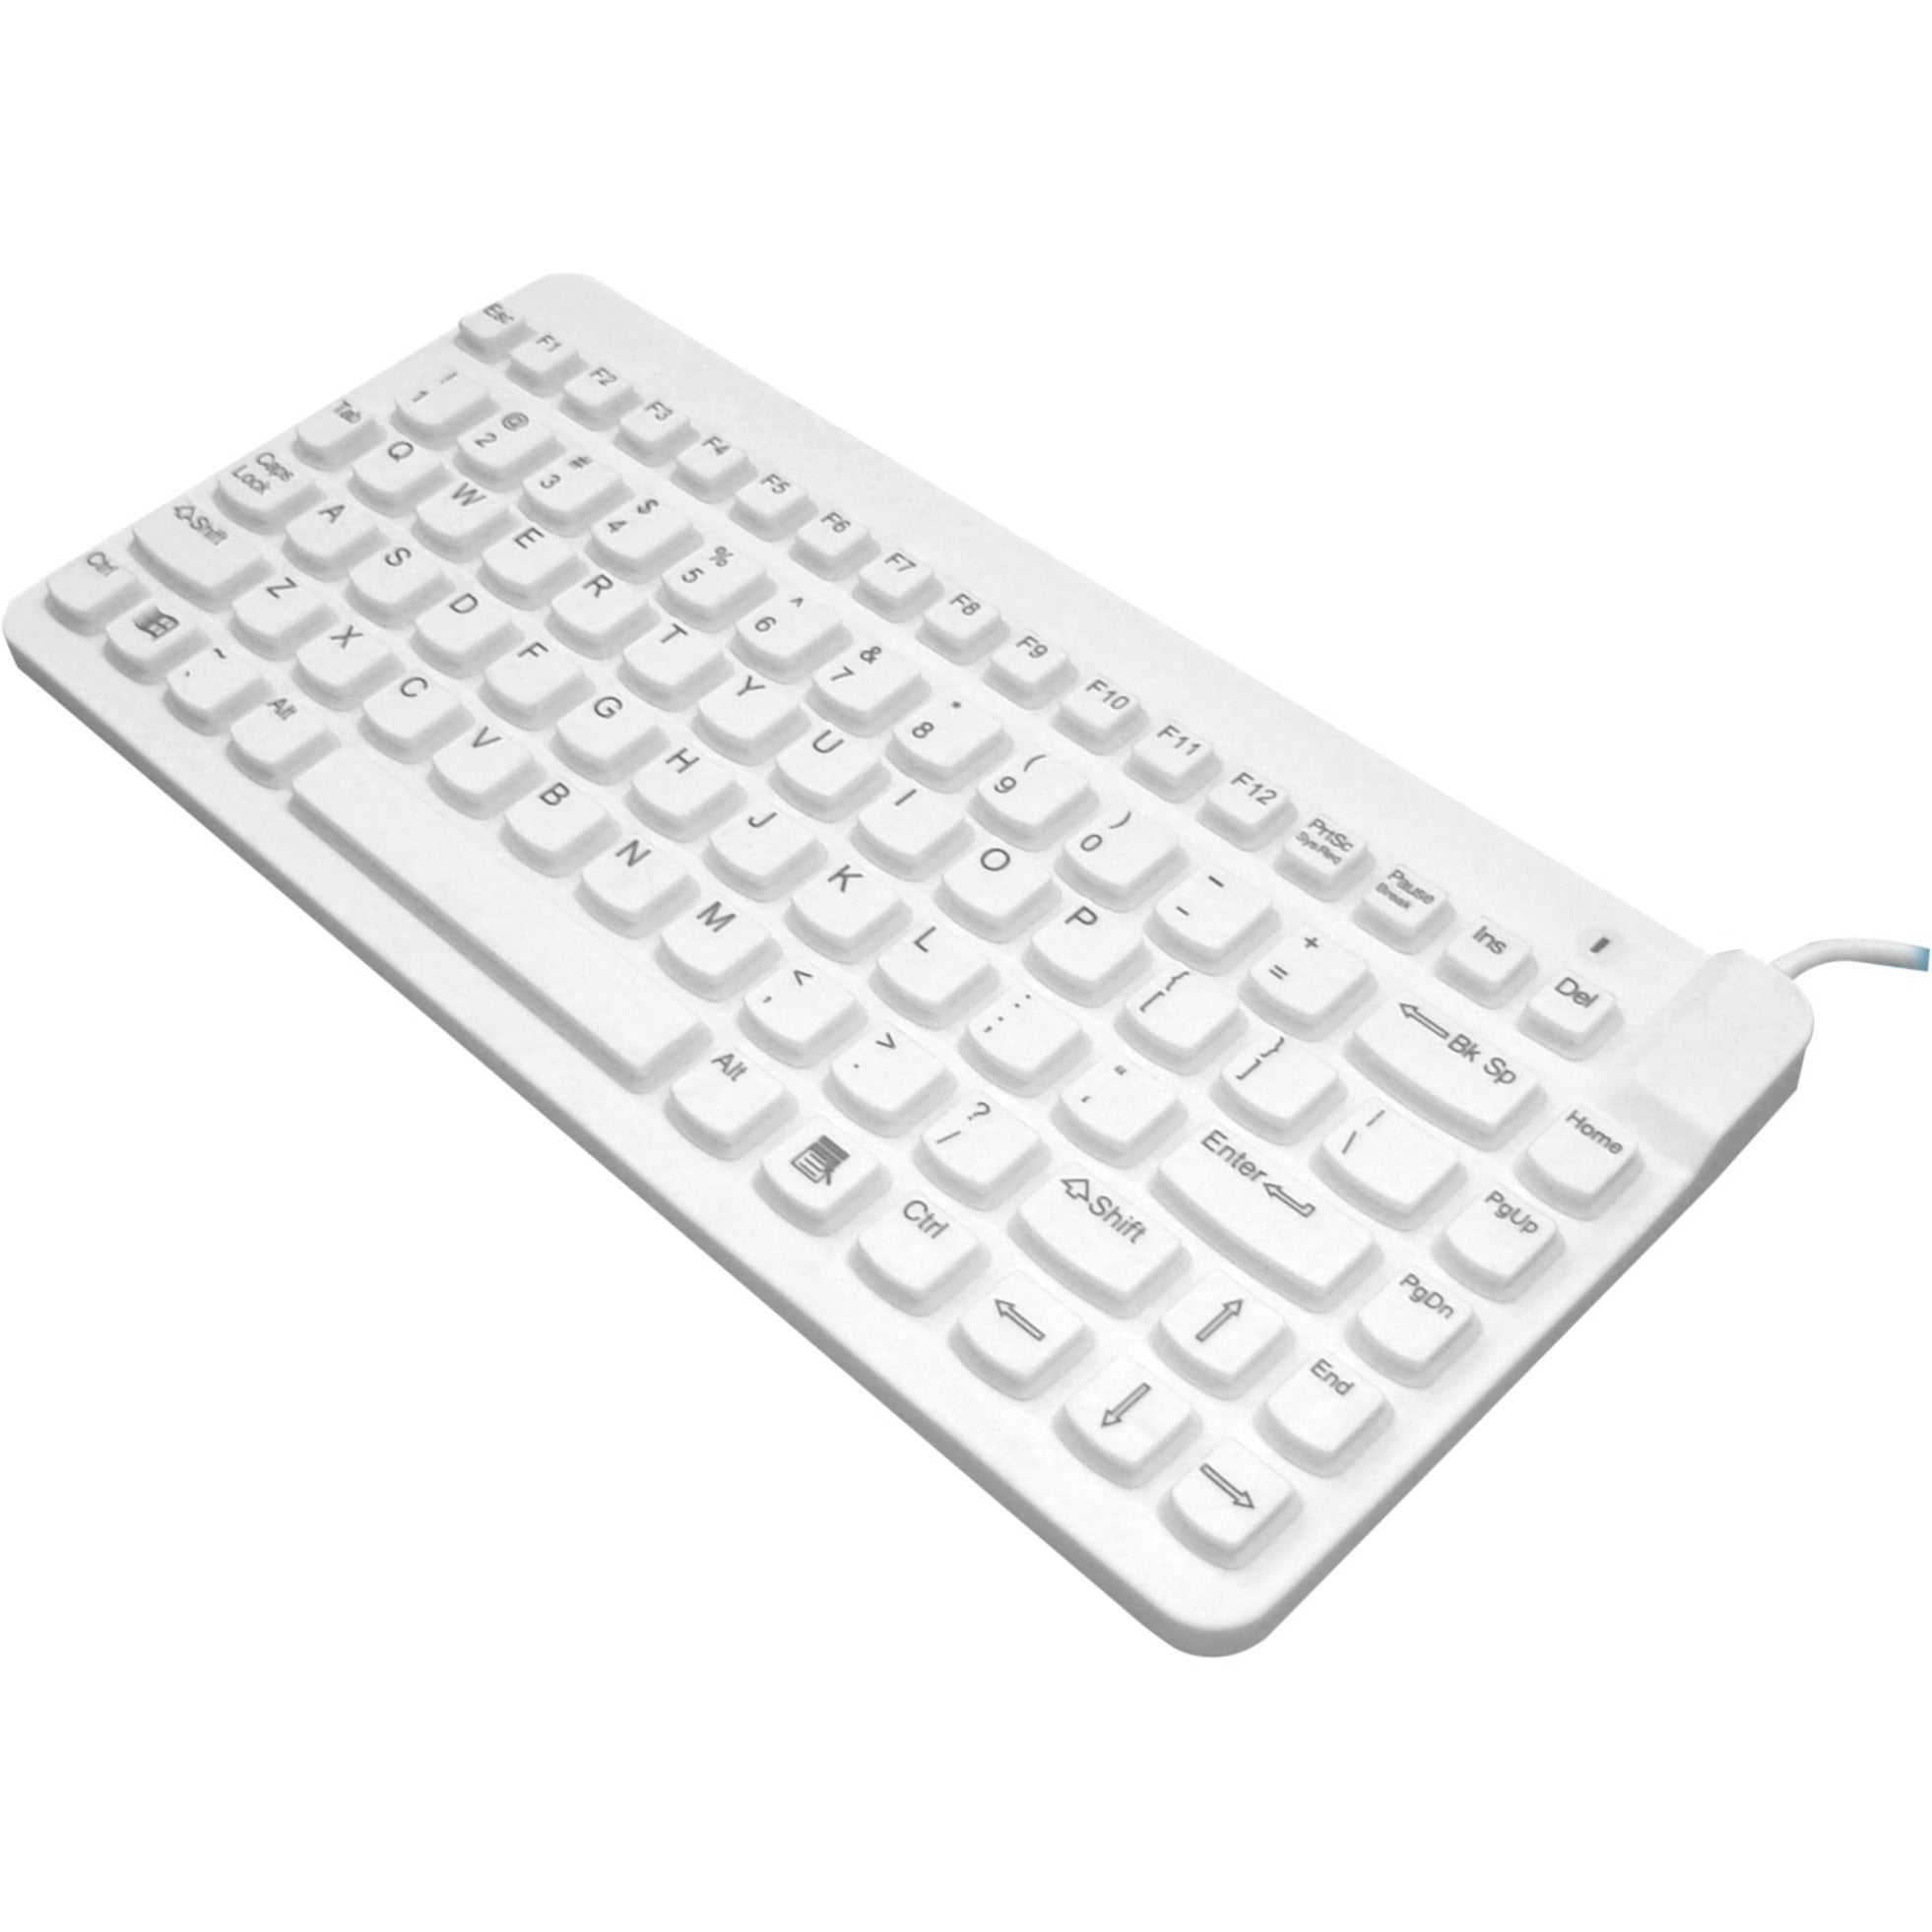 Man & Machine SCLP/MAG/W5 Slim Cool Premium Waterproof Disinfectable Silent 12 Keyboard, White, USB